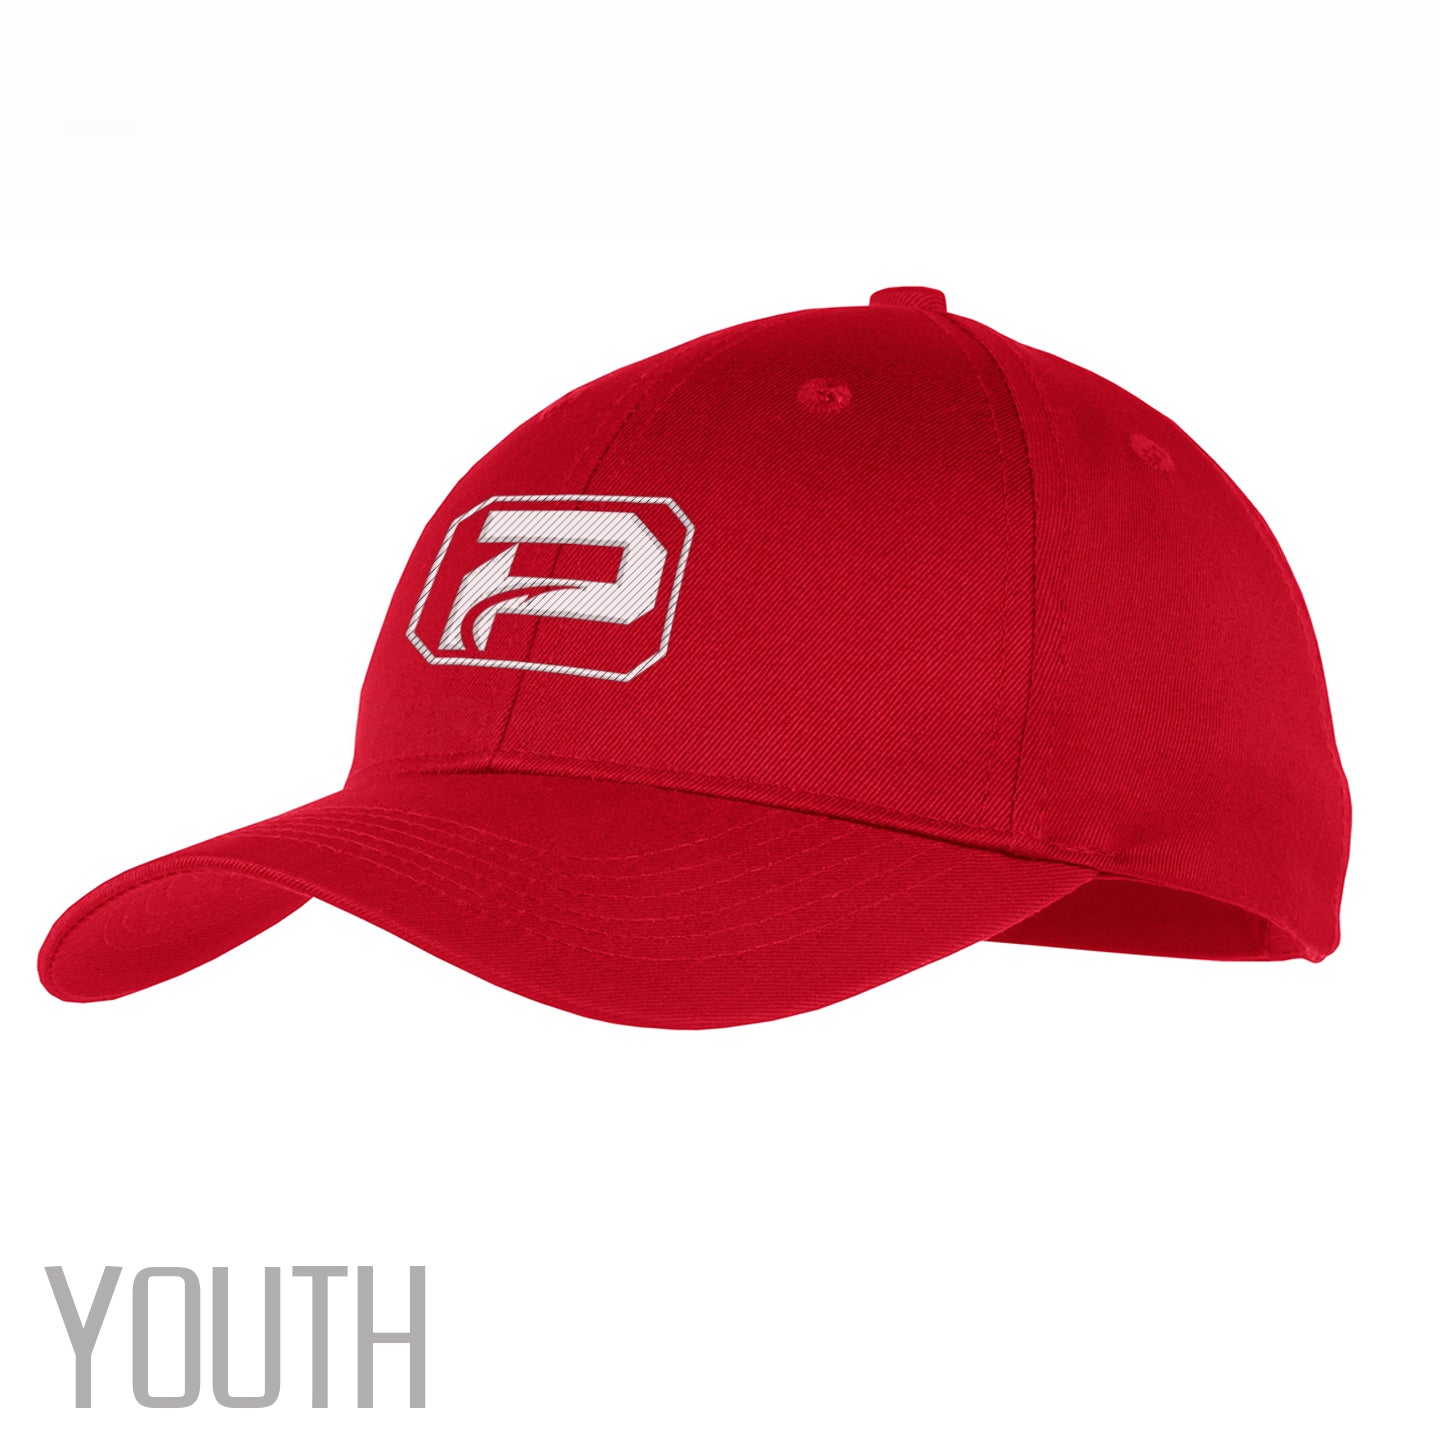 YOUTH PHANTOM HATS - Phantom Outdoors